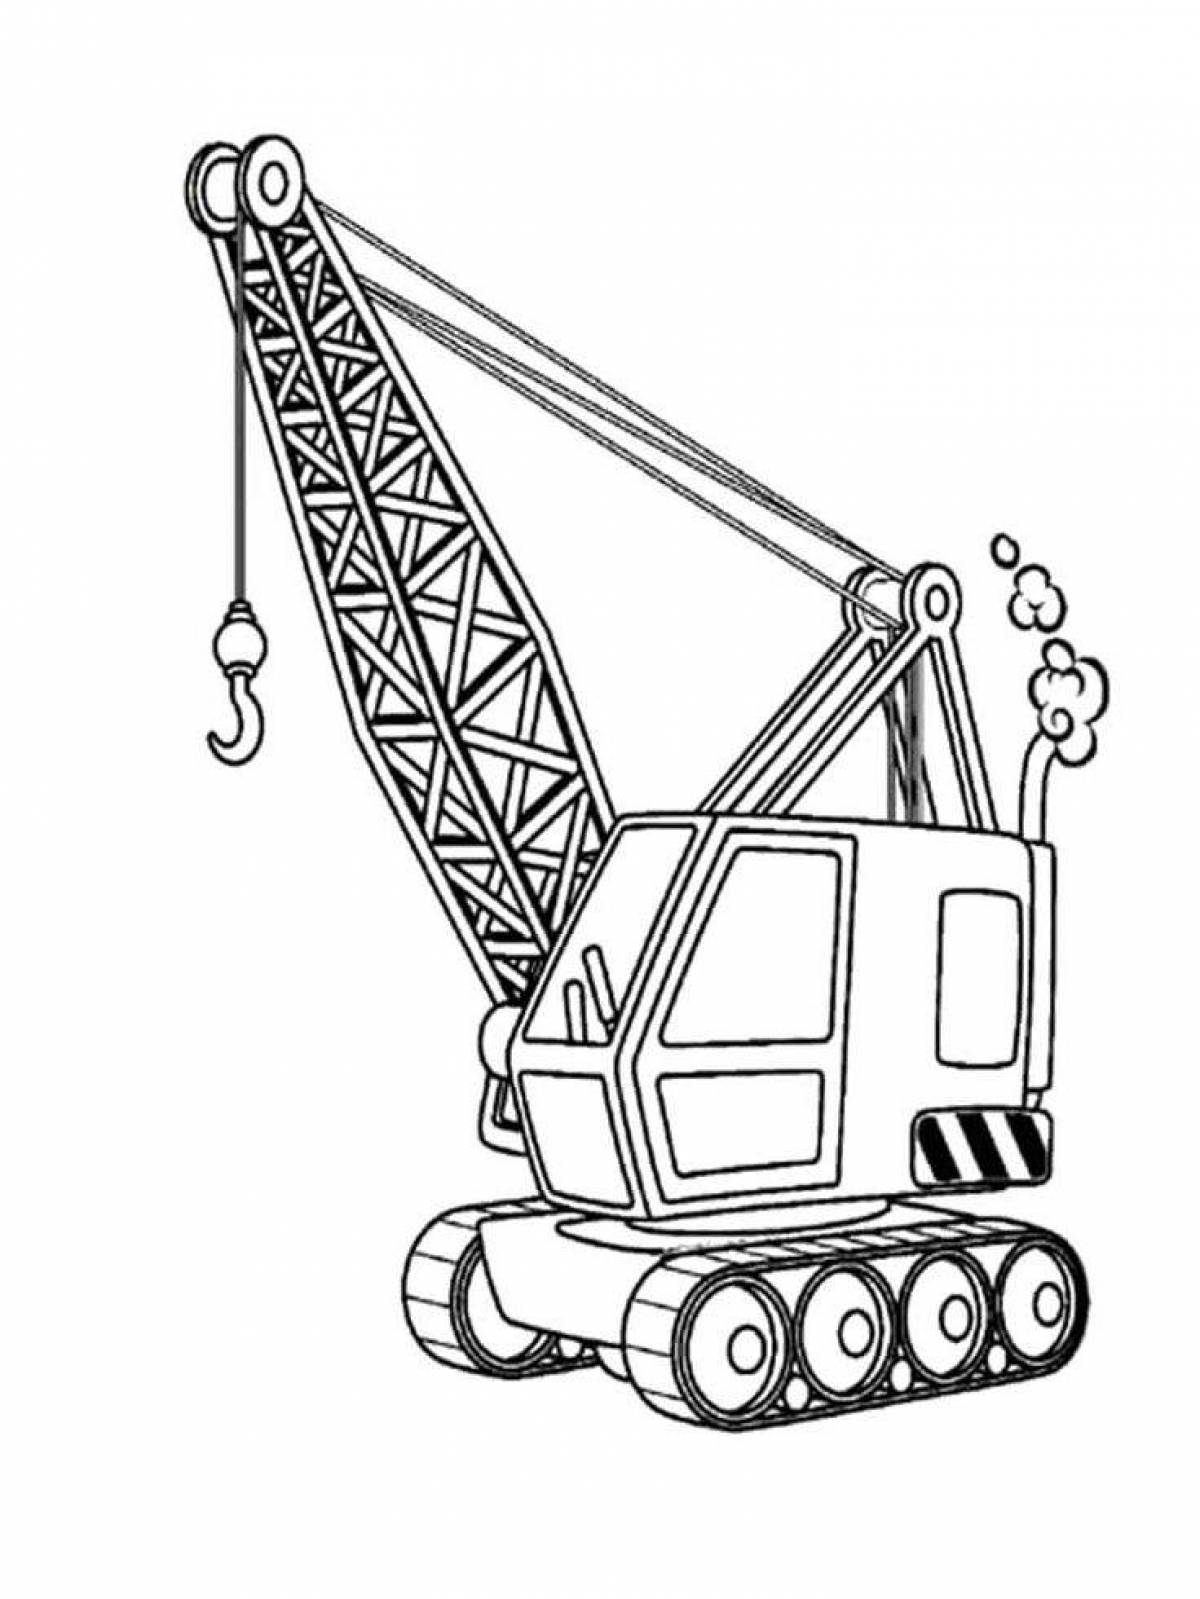 Hoisting crane #4